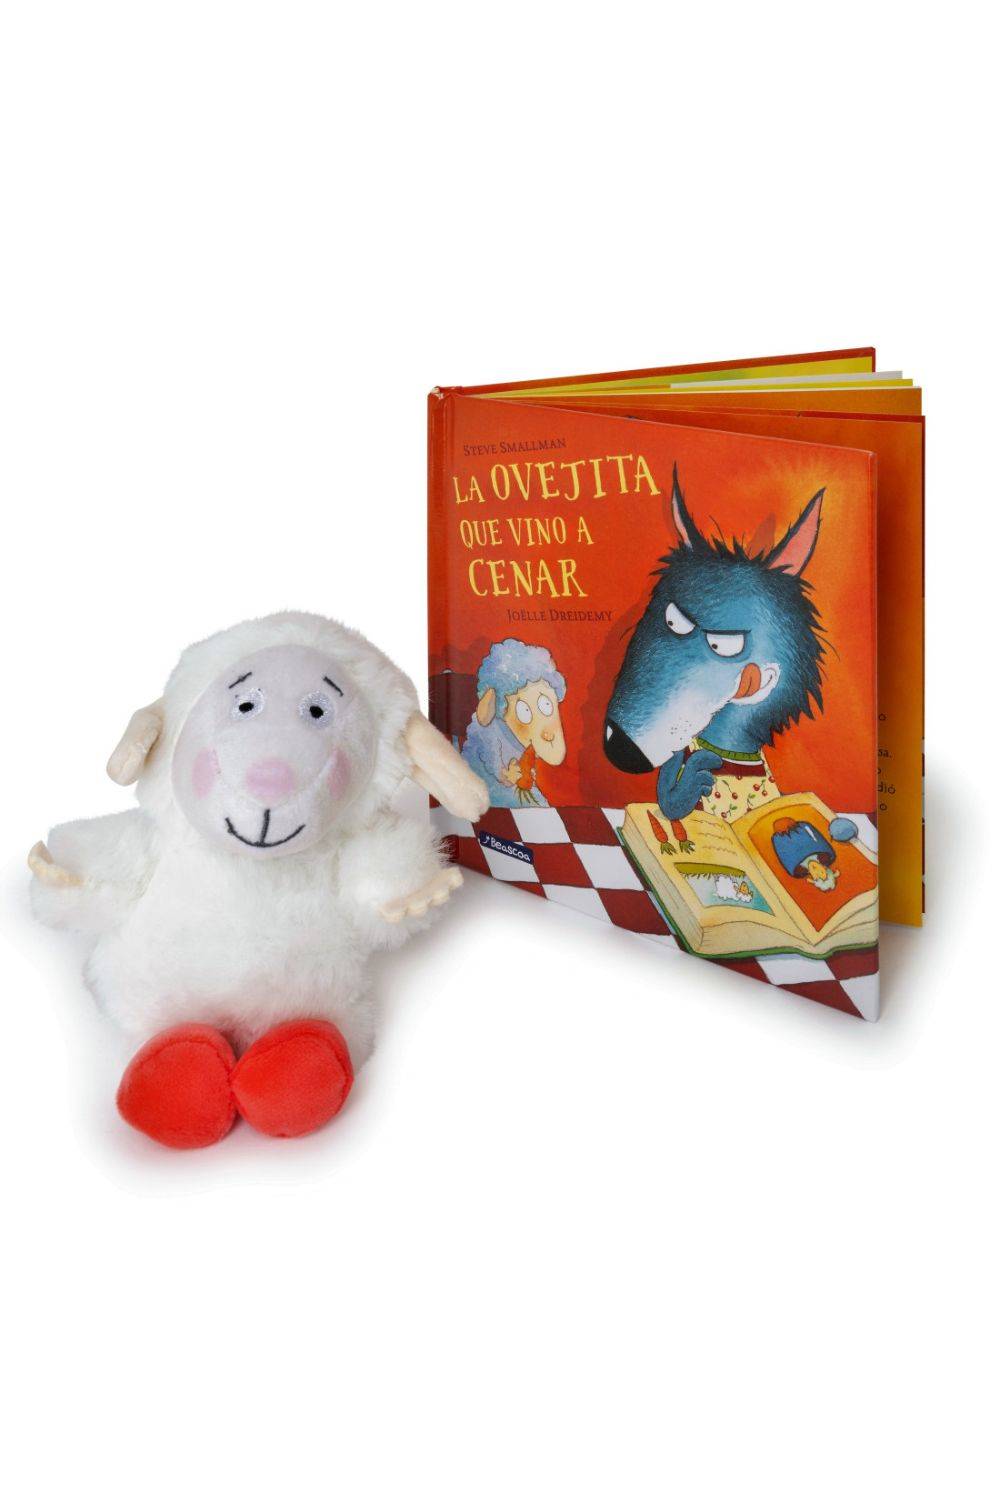 Libros infantiles: ‘La ovejita que vino a cenar’ de Steve Smallman y Joëlle Dreidemy